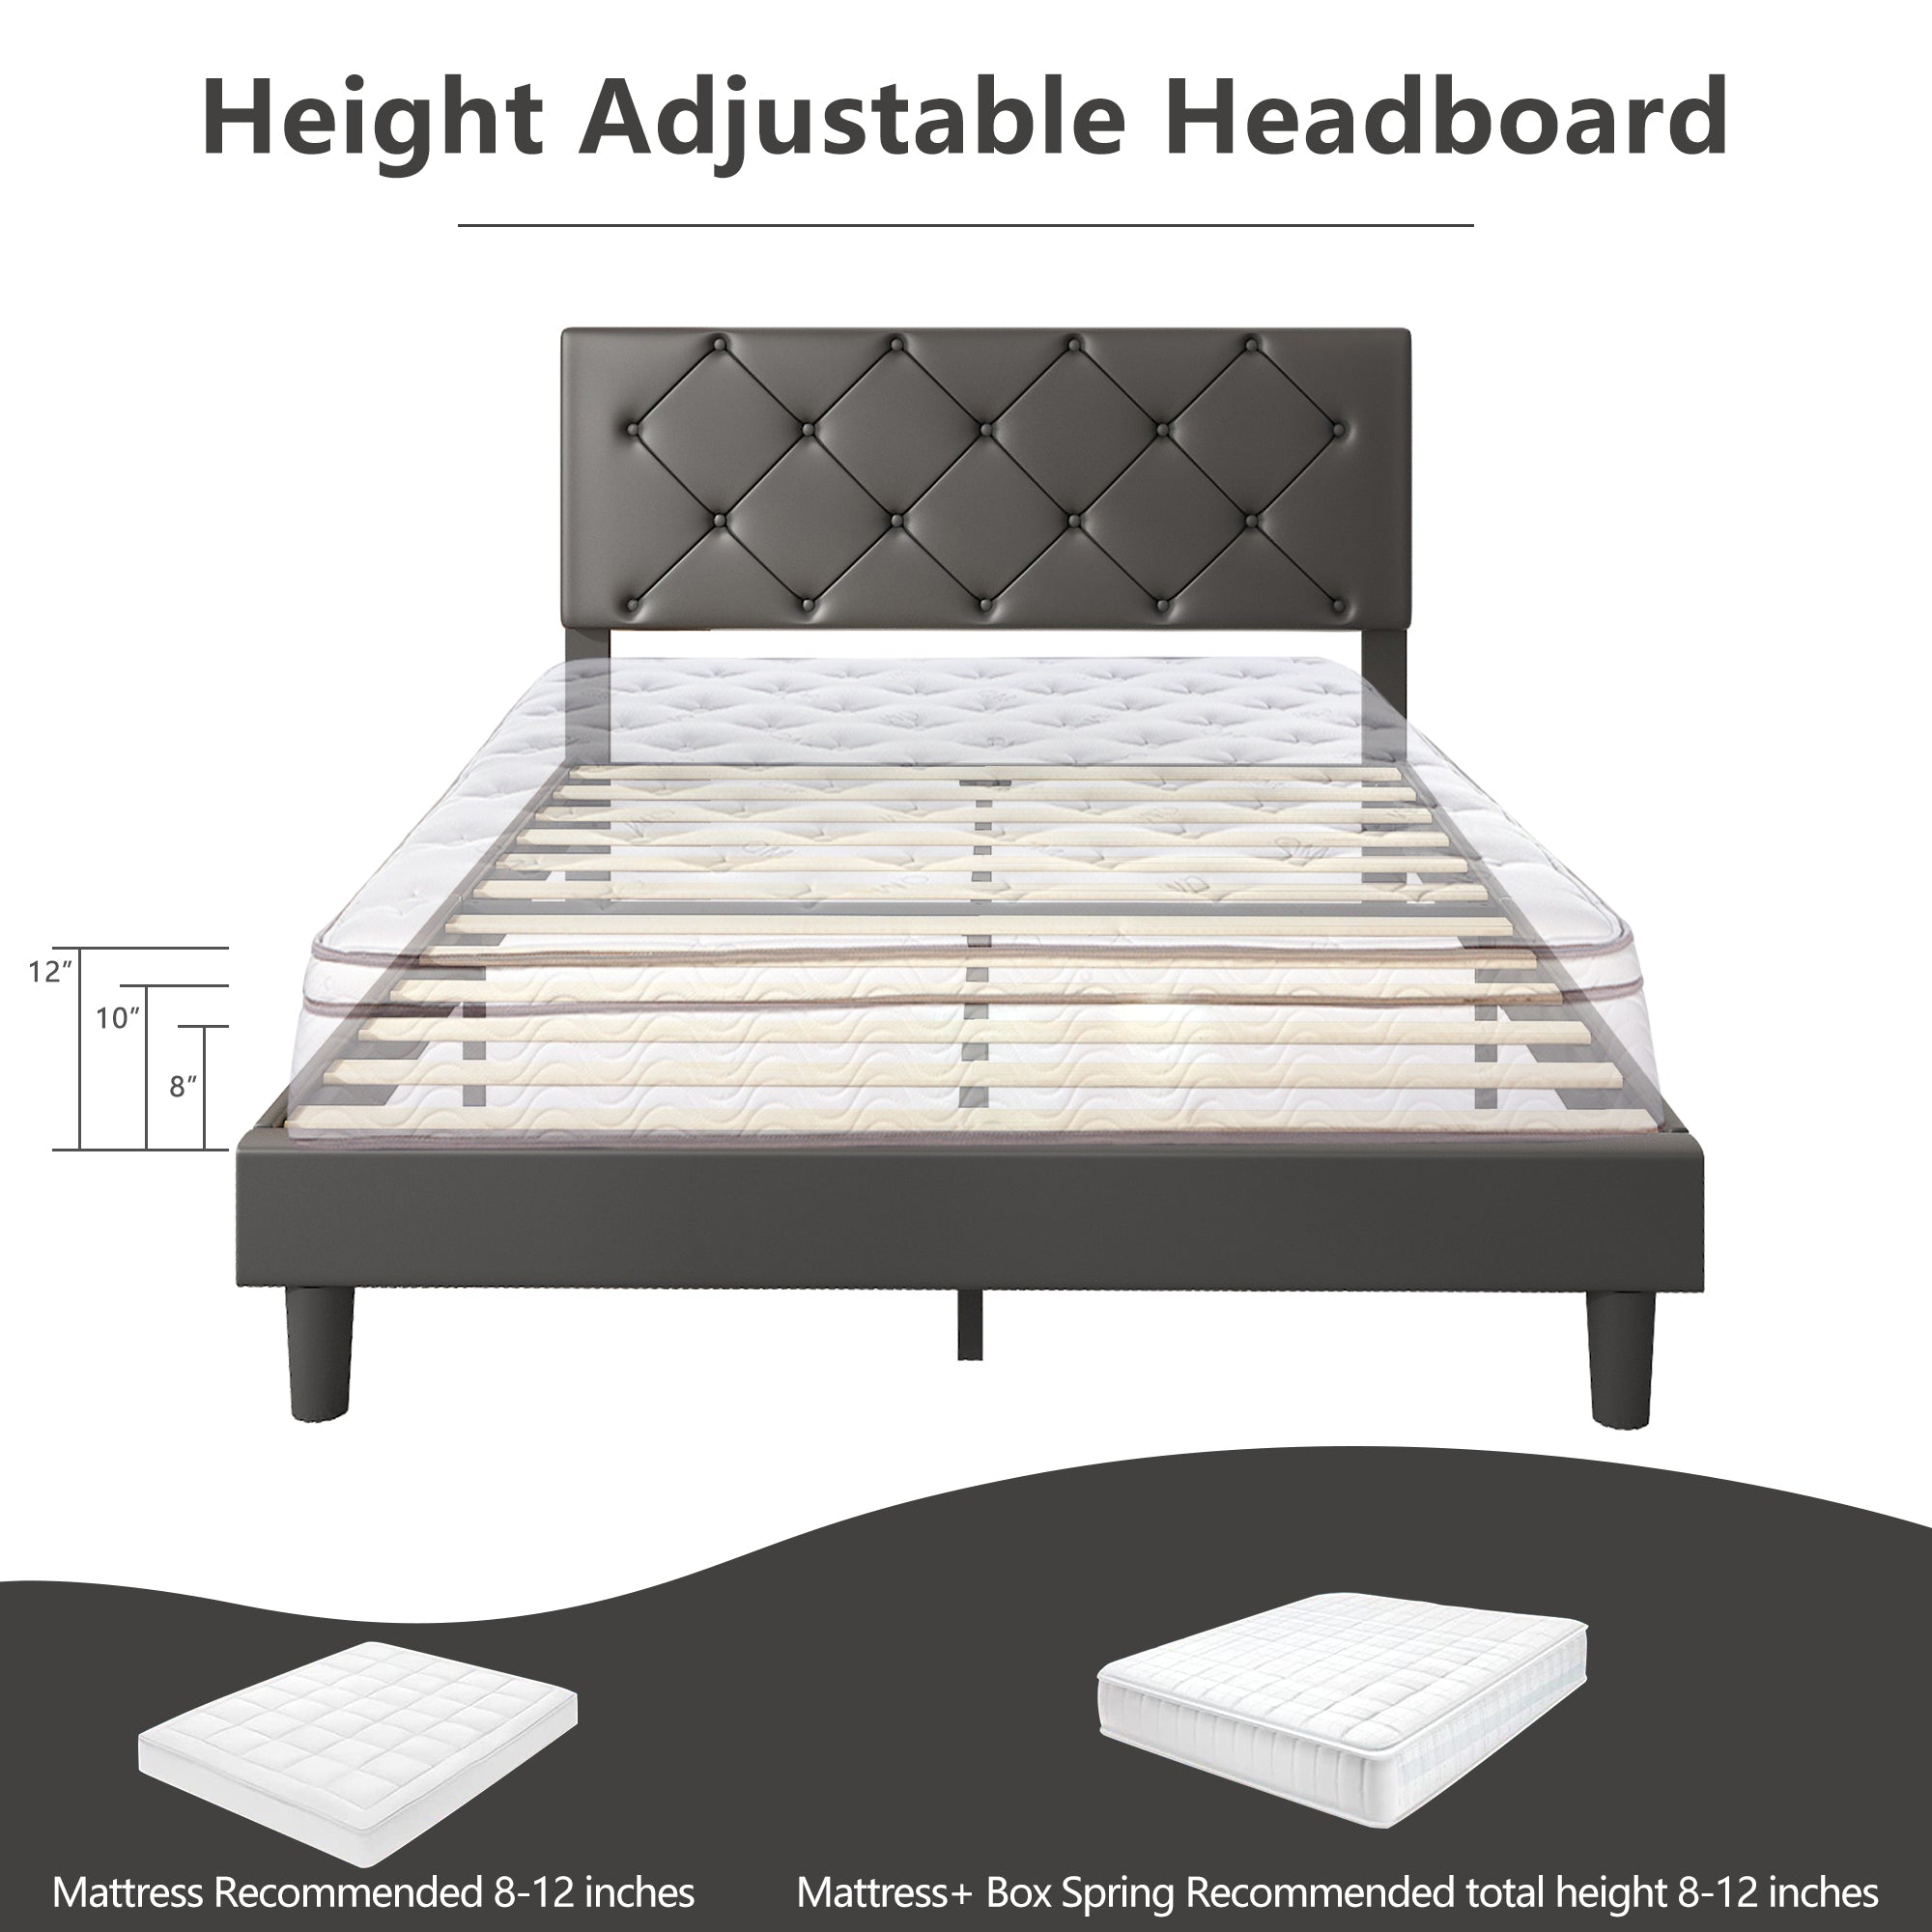 uhomepro Upholstered Platform Full Bed Frame for Adults Kids, Modern Black Full Bed Frame with Headboard, Wood Slat Support, Mattress Foundation, No Box Spring Needed